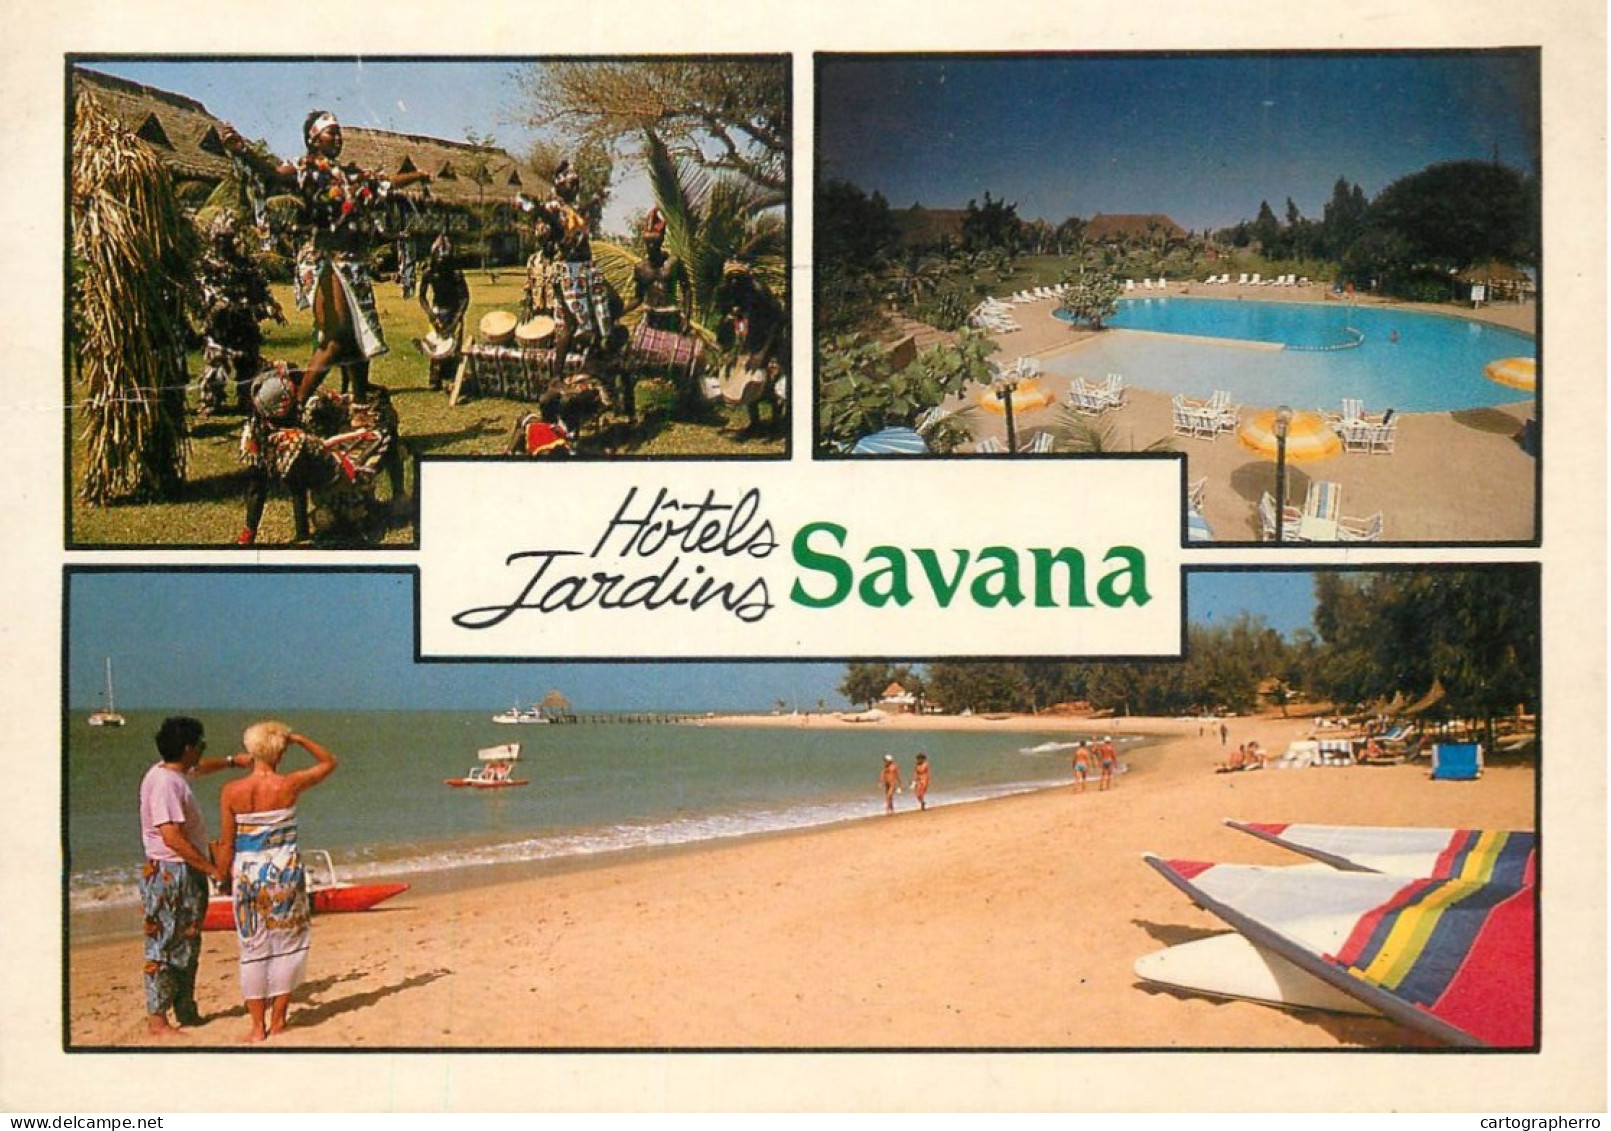 Navigation Sailing Vessels & Boats Themed Postcard Savana Hotels Jardins - Voiliers